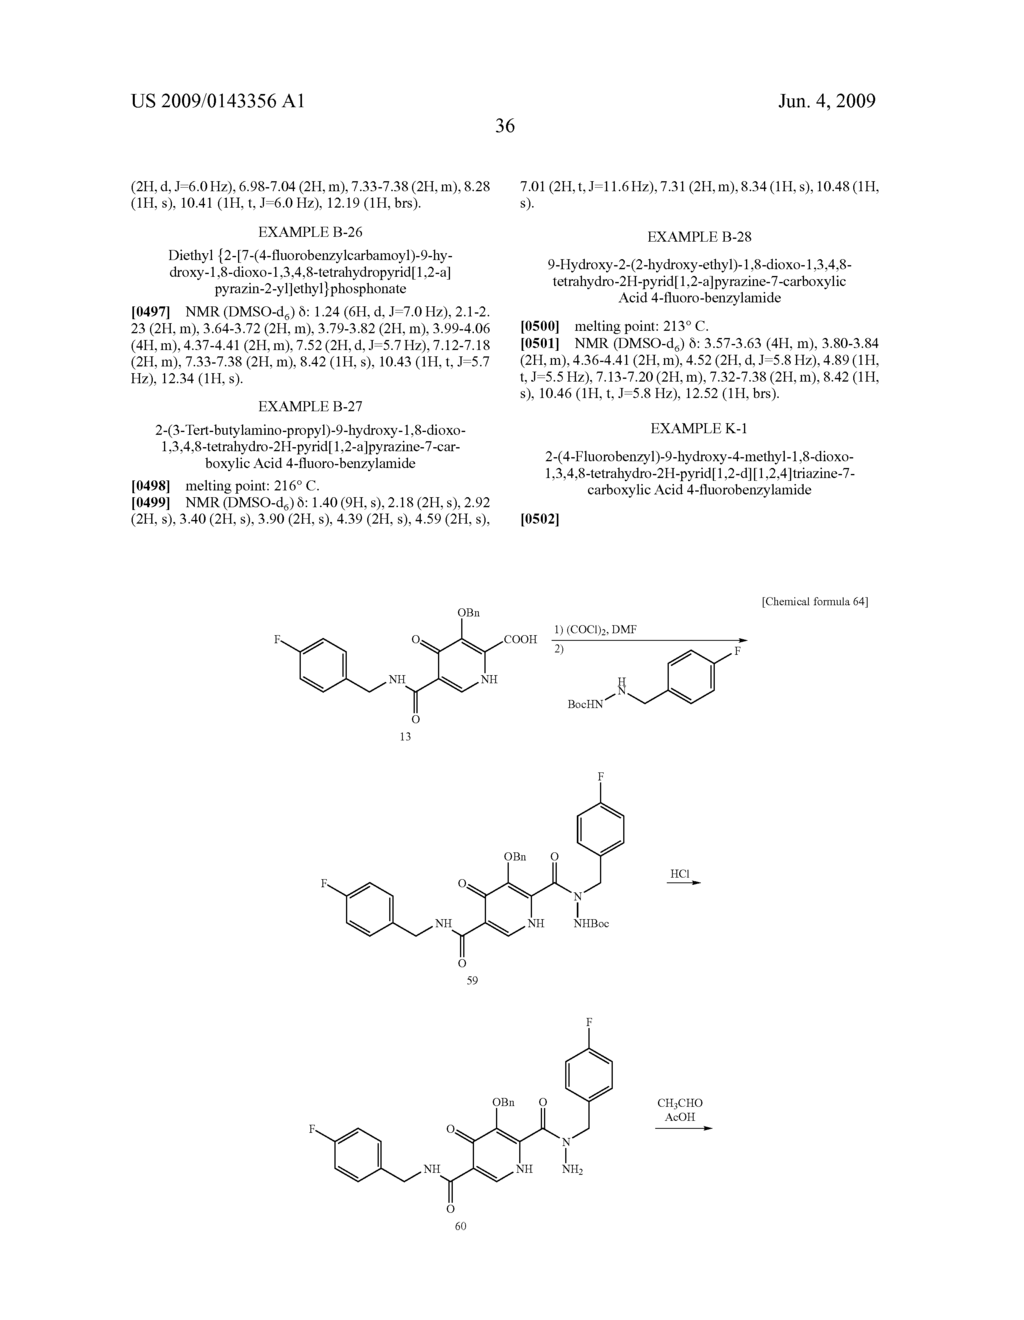 Polycylclic Carbamoylpyridone Derivative Having HIV Integrase Inhibitory Acitvity - diagram, schematic, and image 37